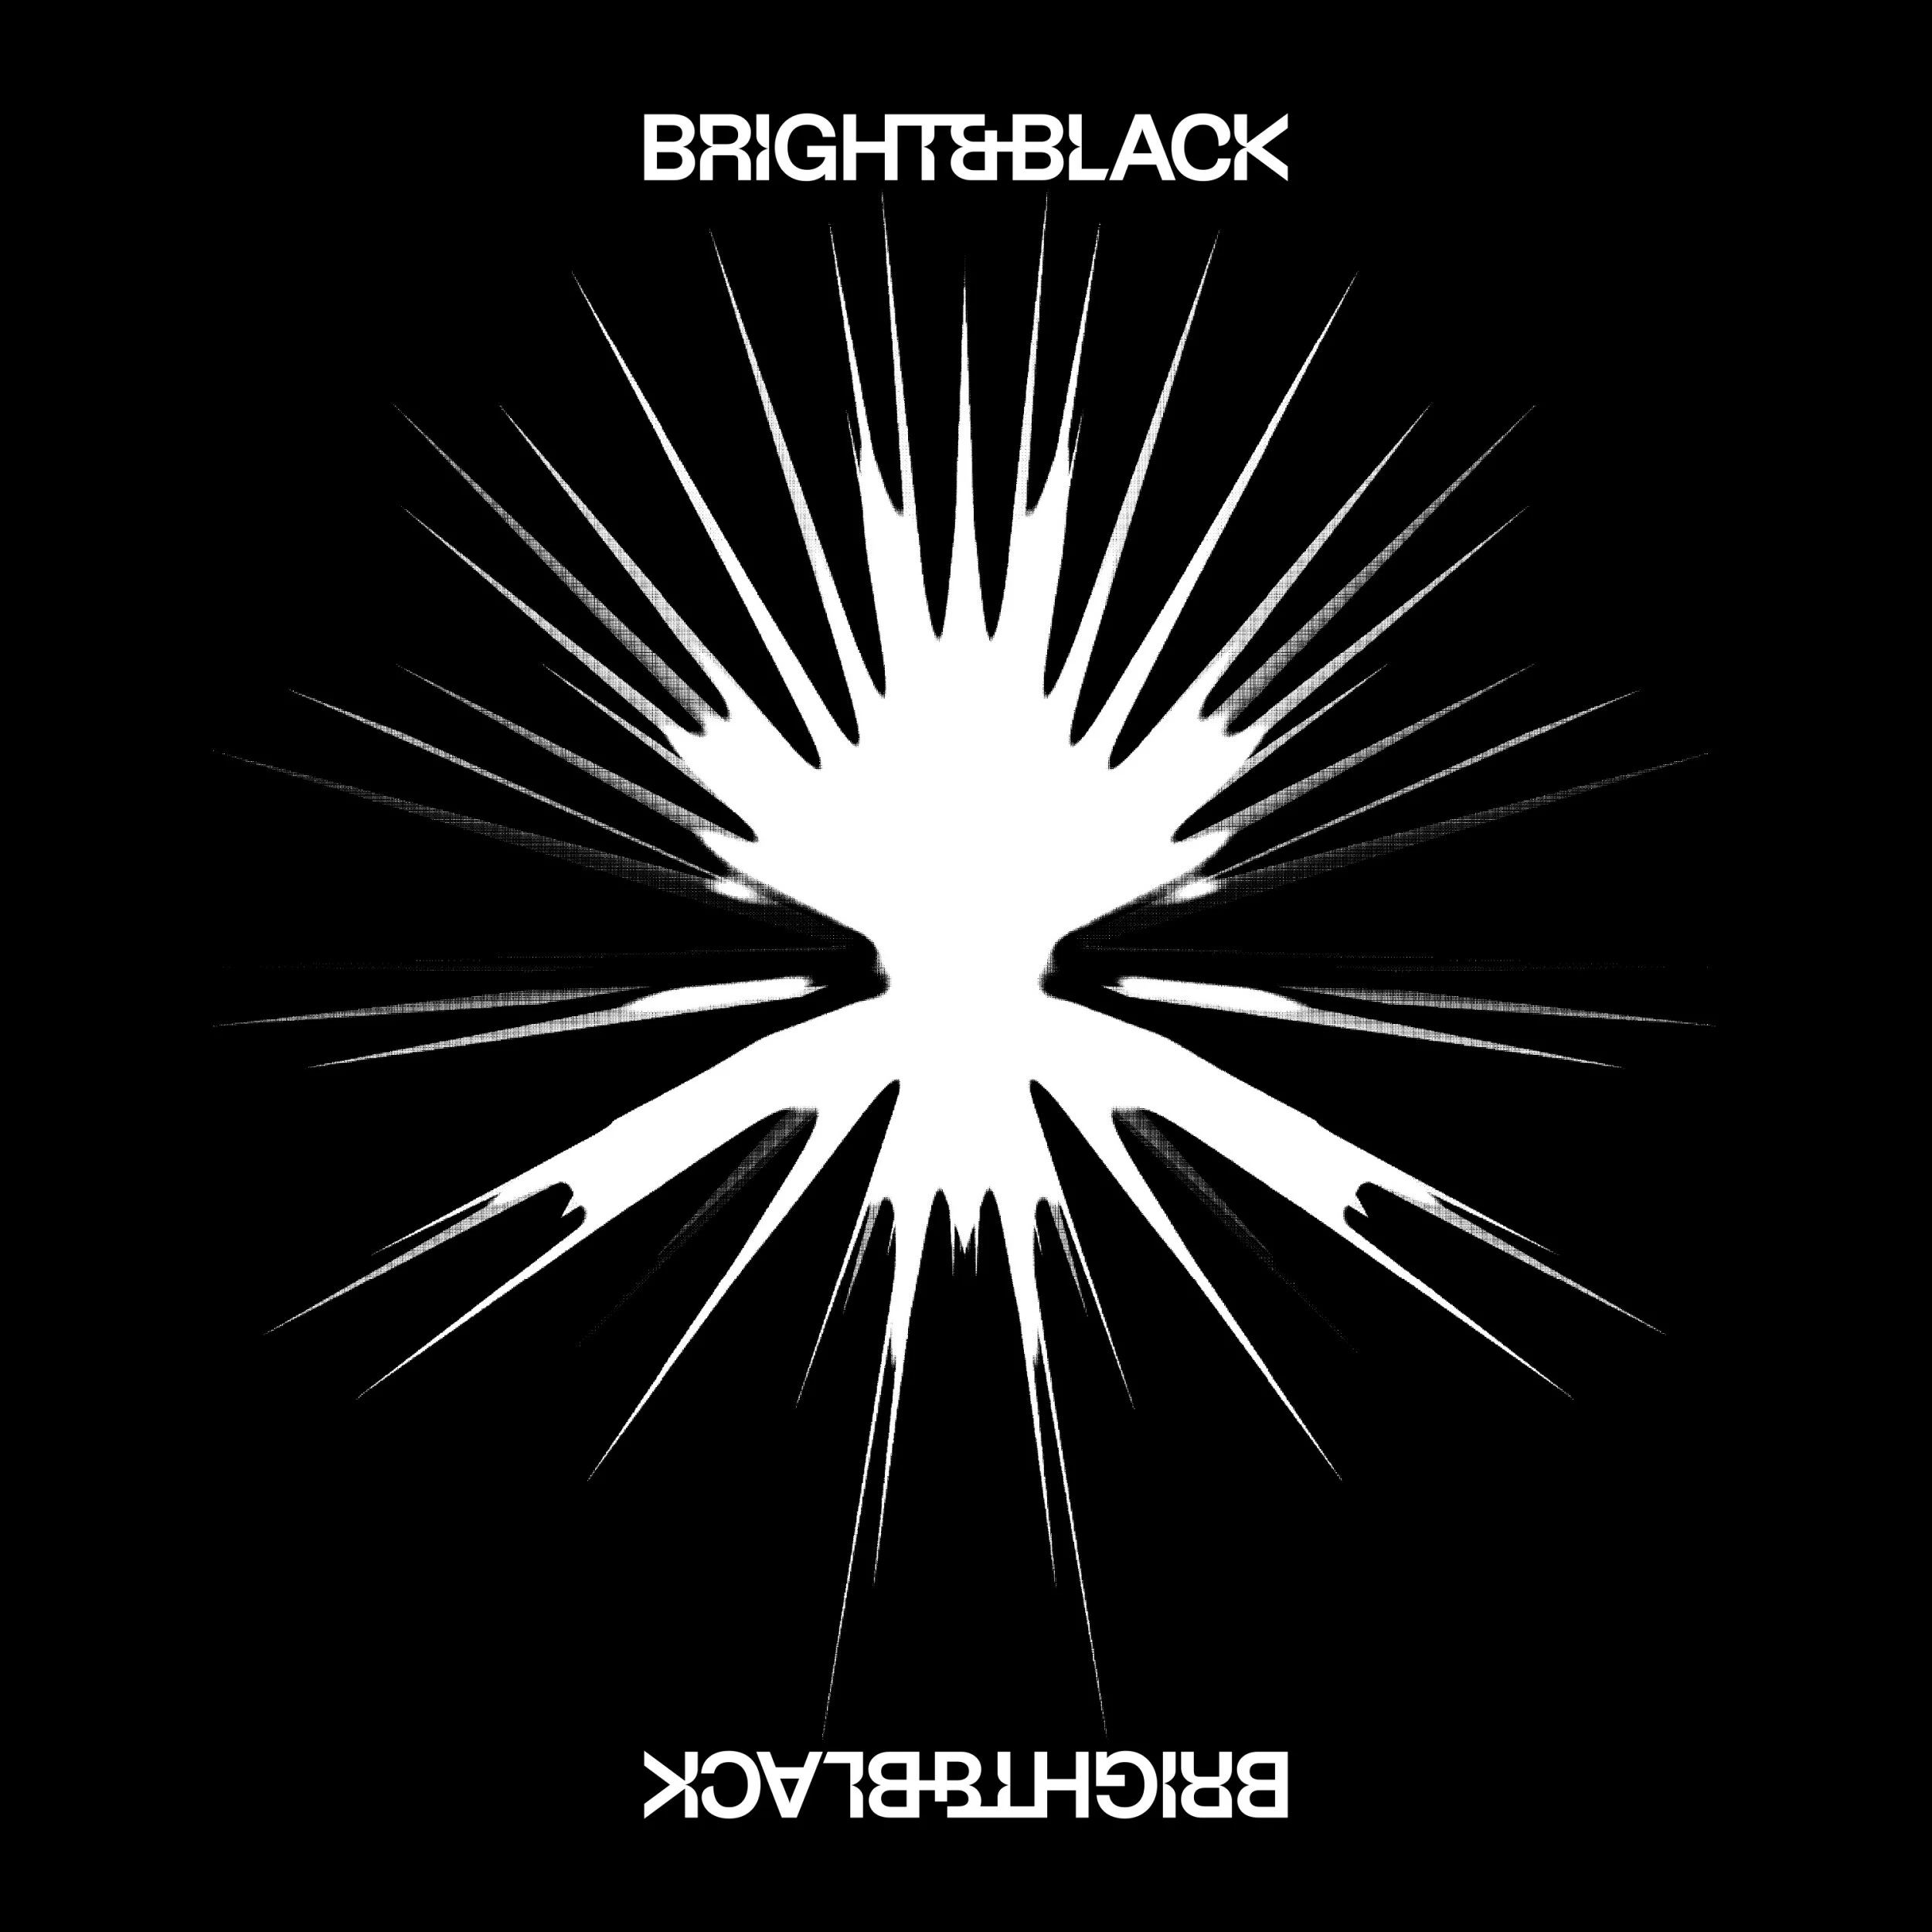 BRIGHT & BLACK FEAT. EICCA TOPPINEN/KRISTIAN JÄRVI/BALTIC SEA PHILHARMONIC - The Album [BLACK DLP]